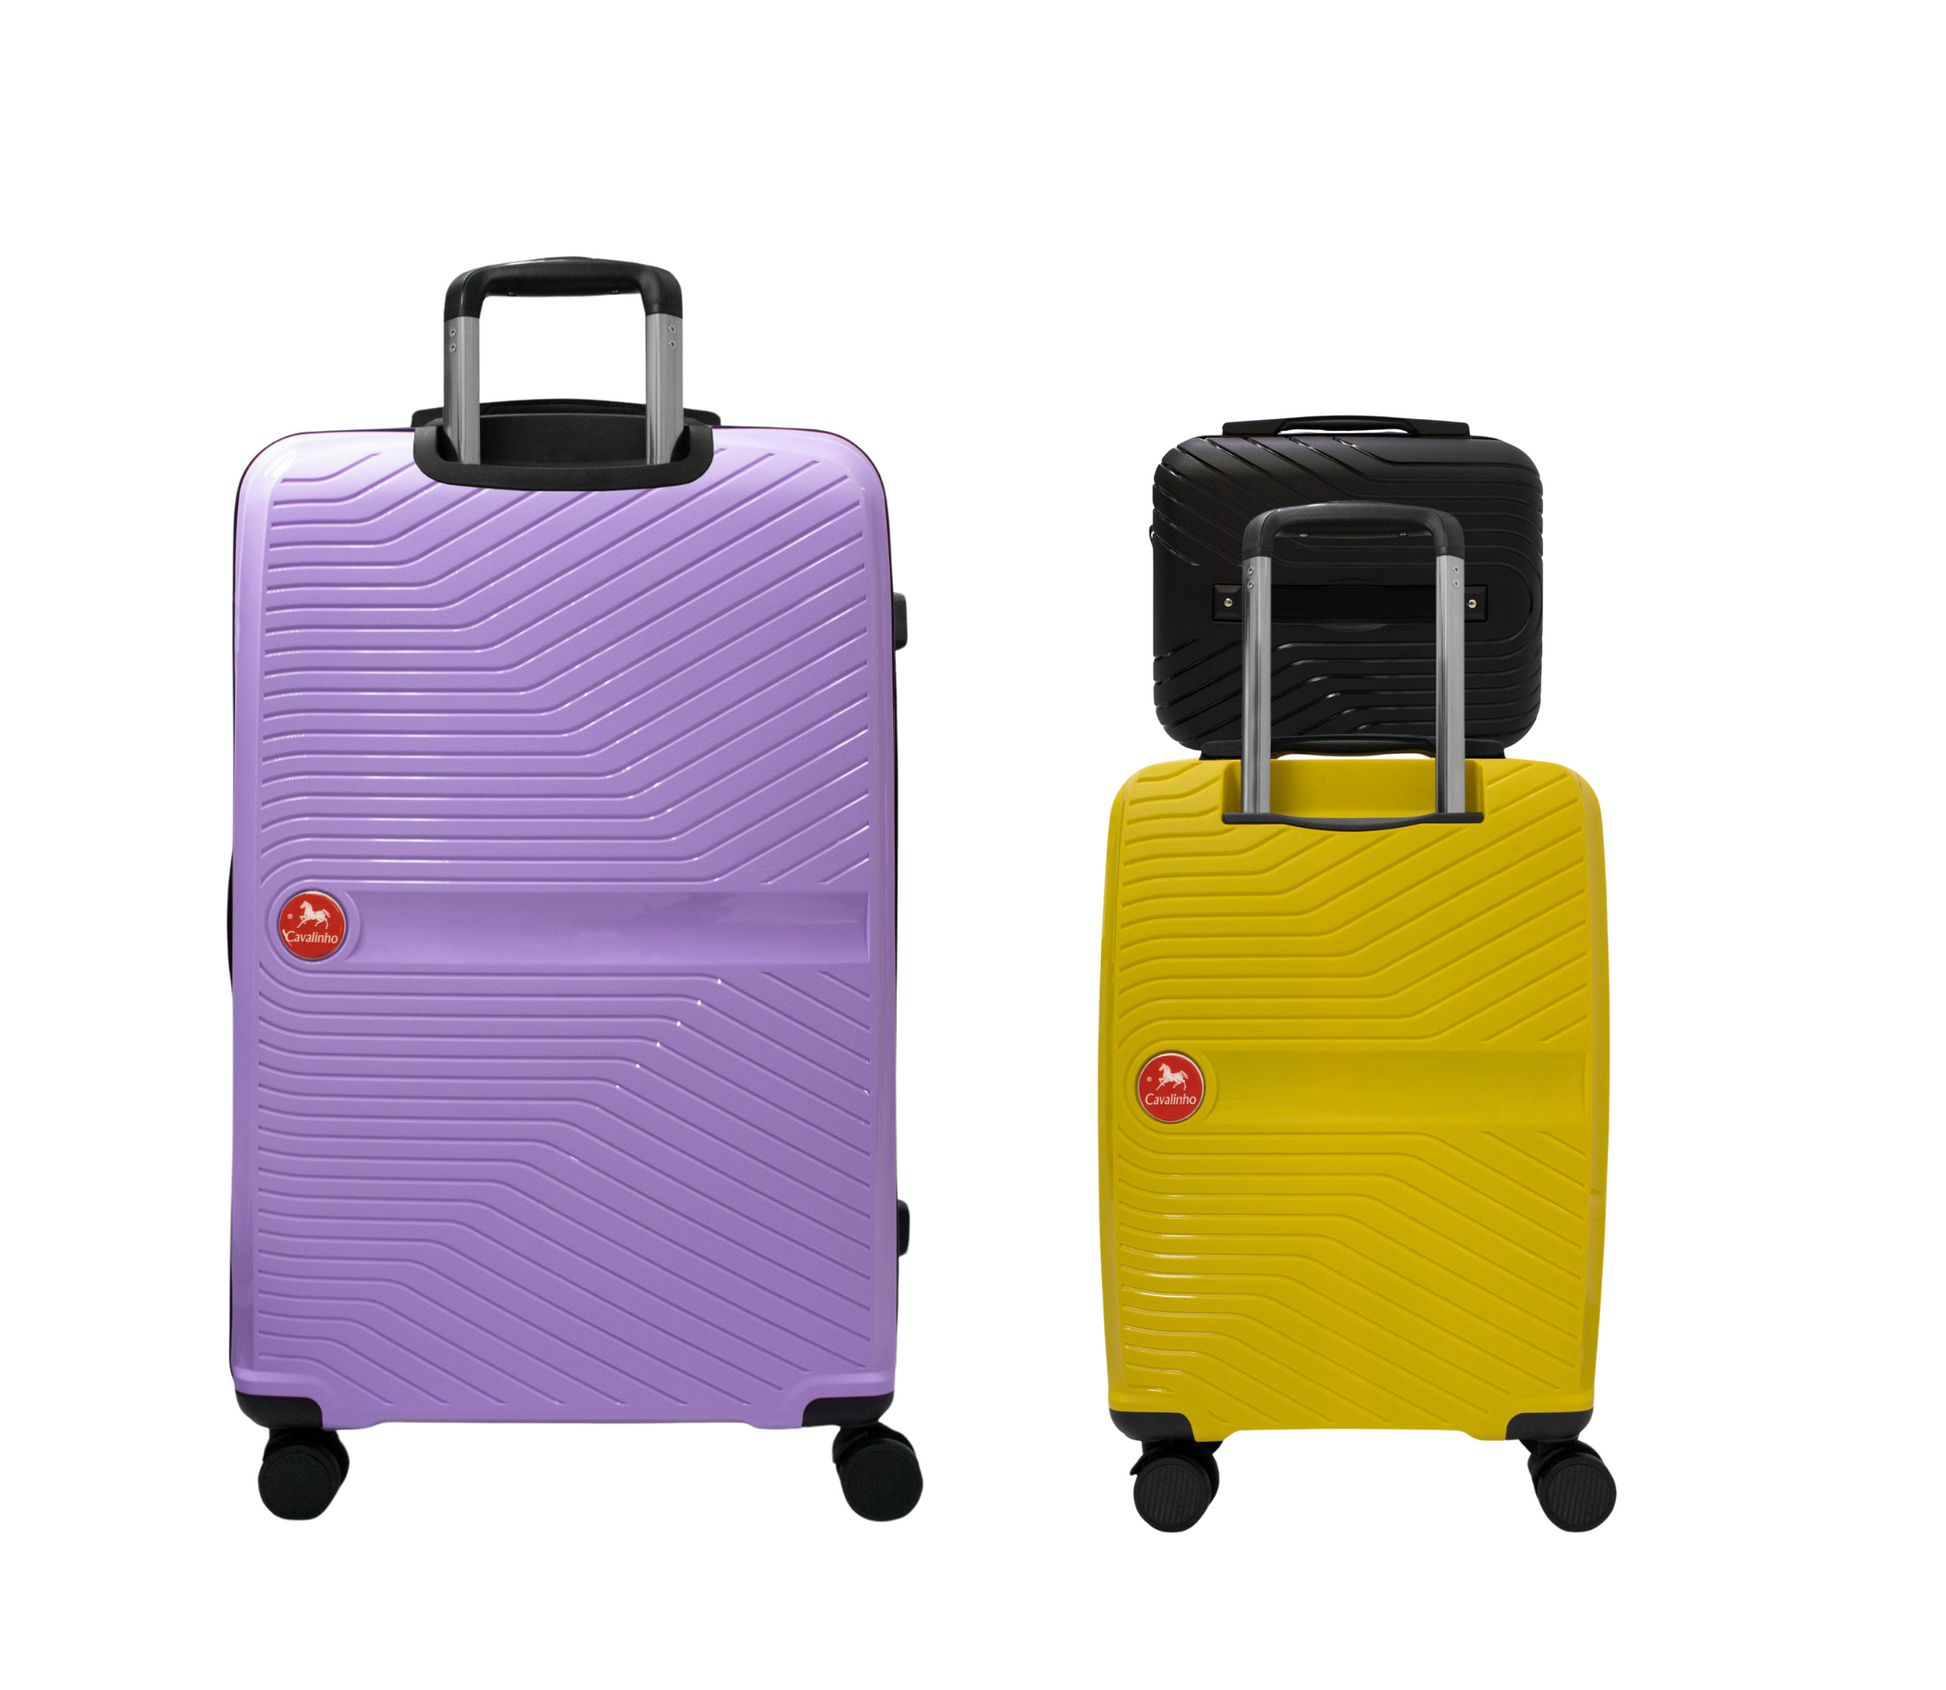 Cavalinho Colorful 3 Piece Luggage Set (15", 19" & 28") - Black Yellow Lilac - 68020004.010839.S151928._3